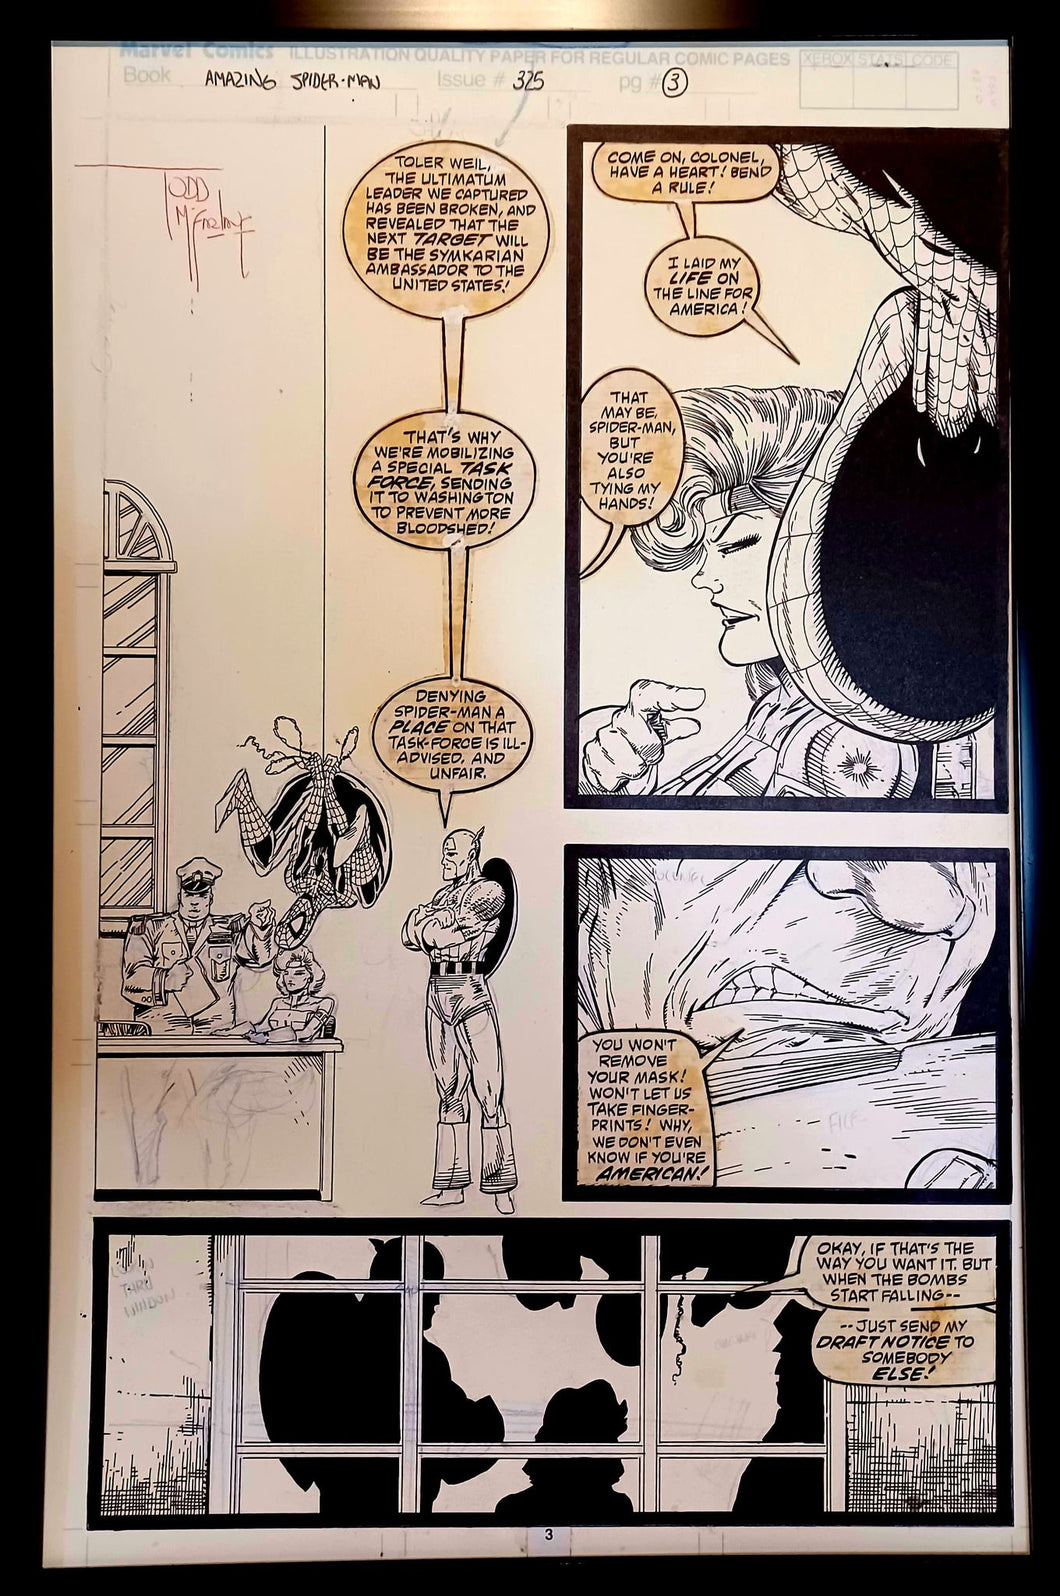 Amazing Spider-Man #325 pg. 3 by Todd McFarlane 11x17 FRAMED Original Art Print Comic Poster